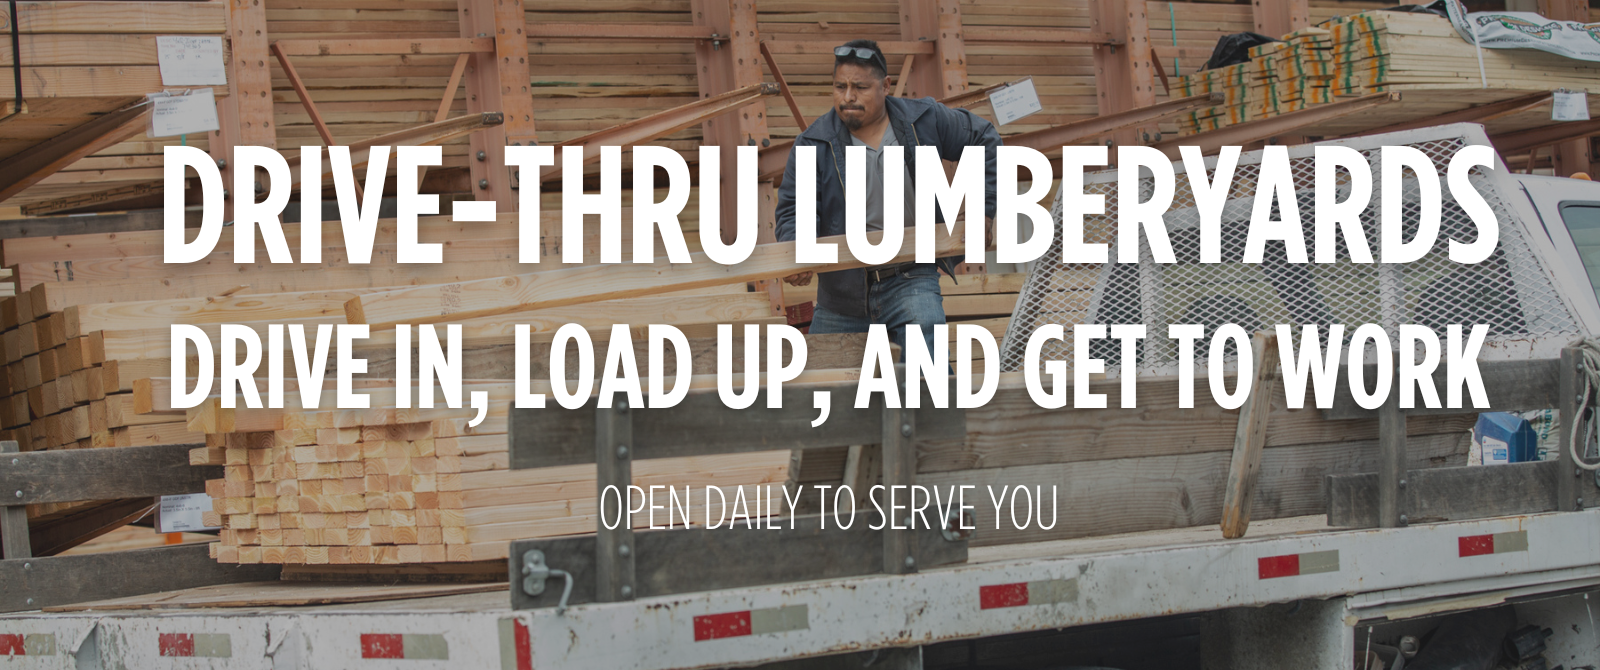 Drive-thru Lumberyard